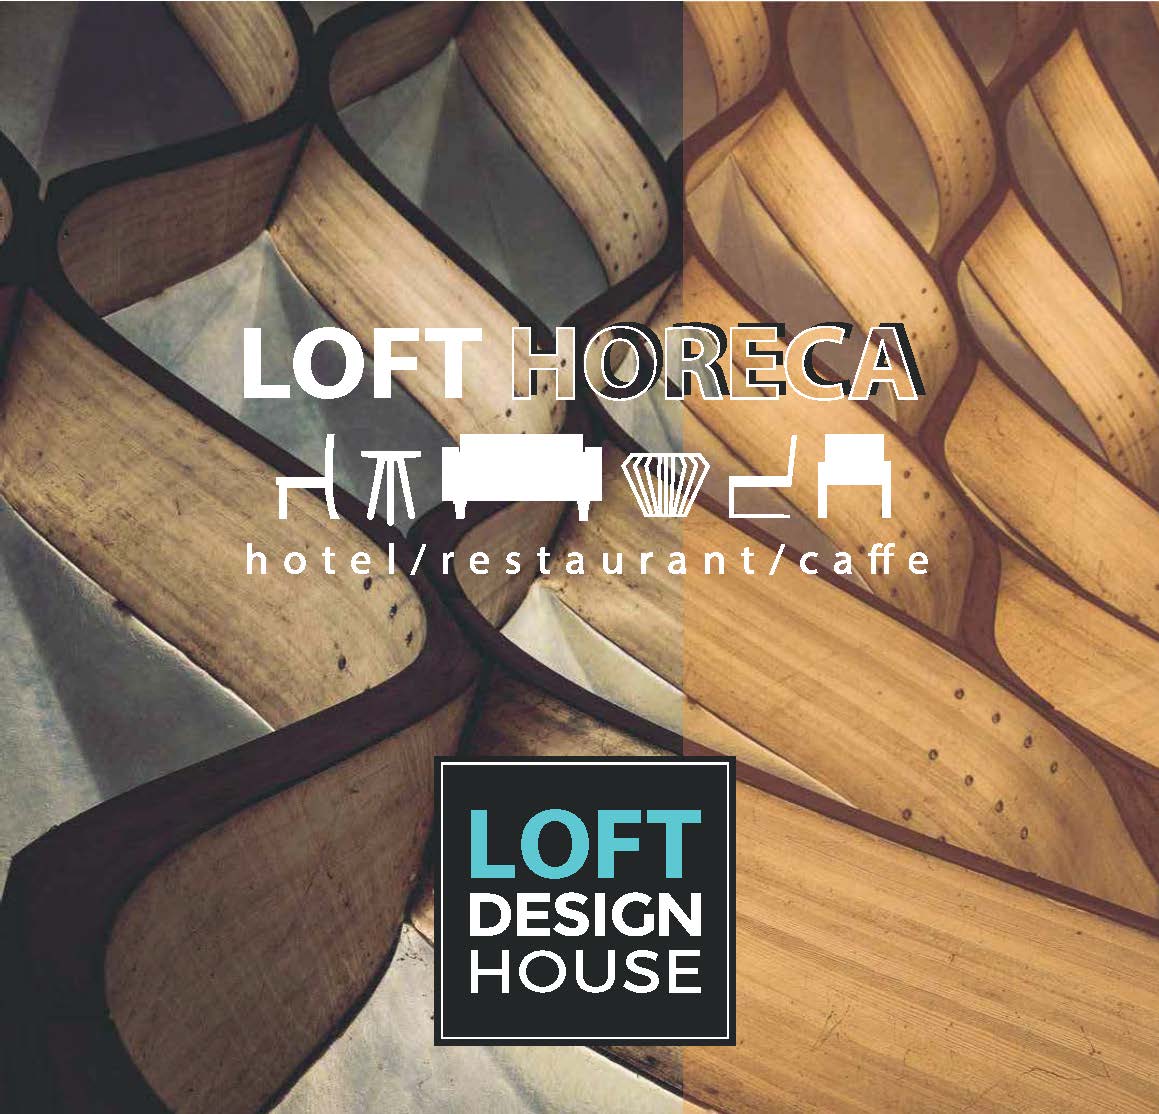 LOFT HORECA kolekcija